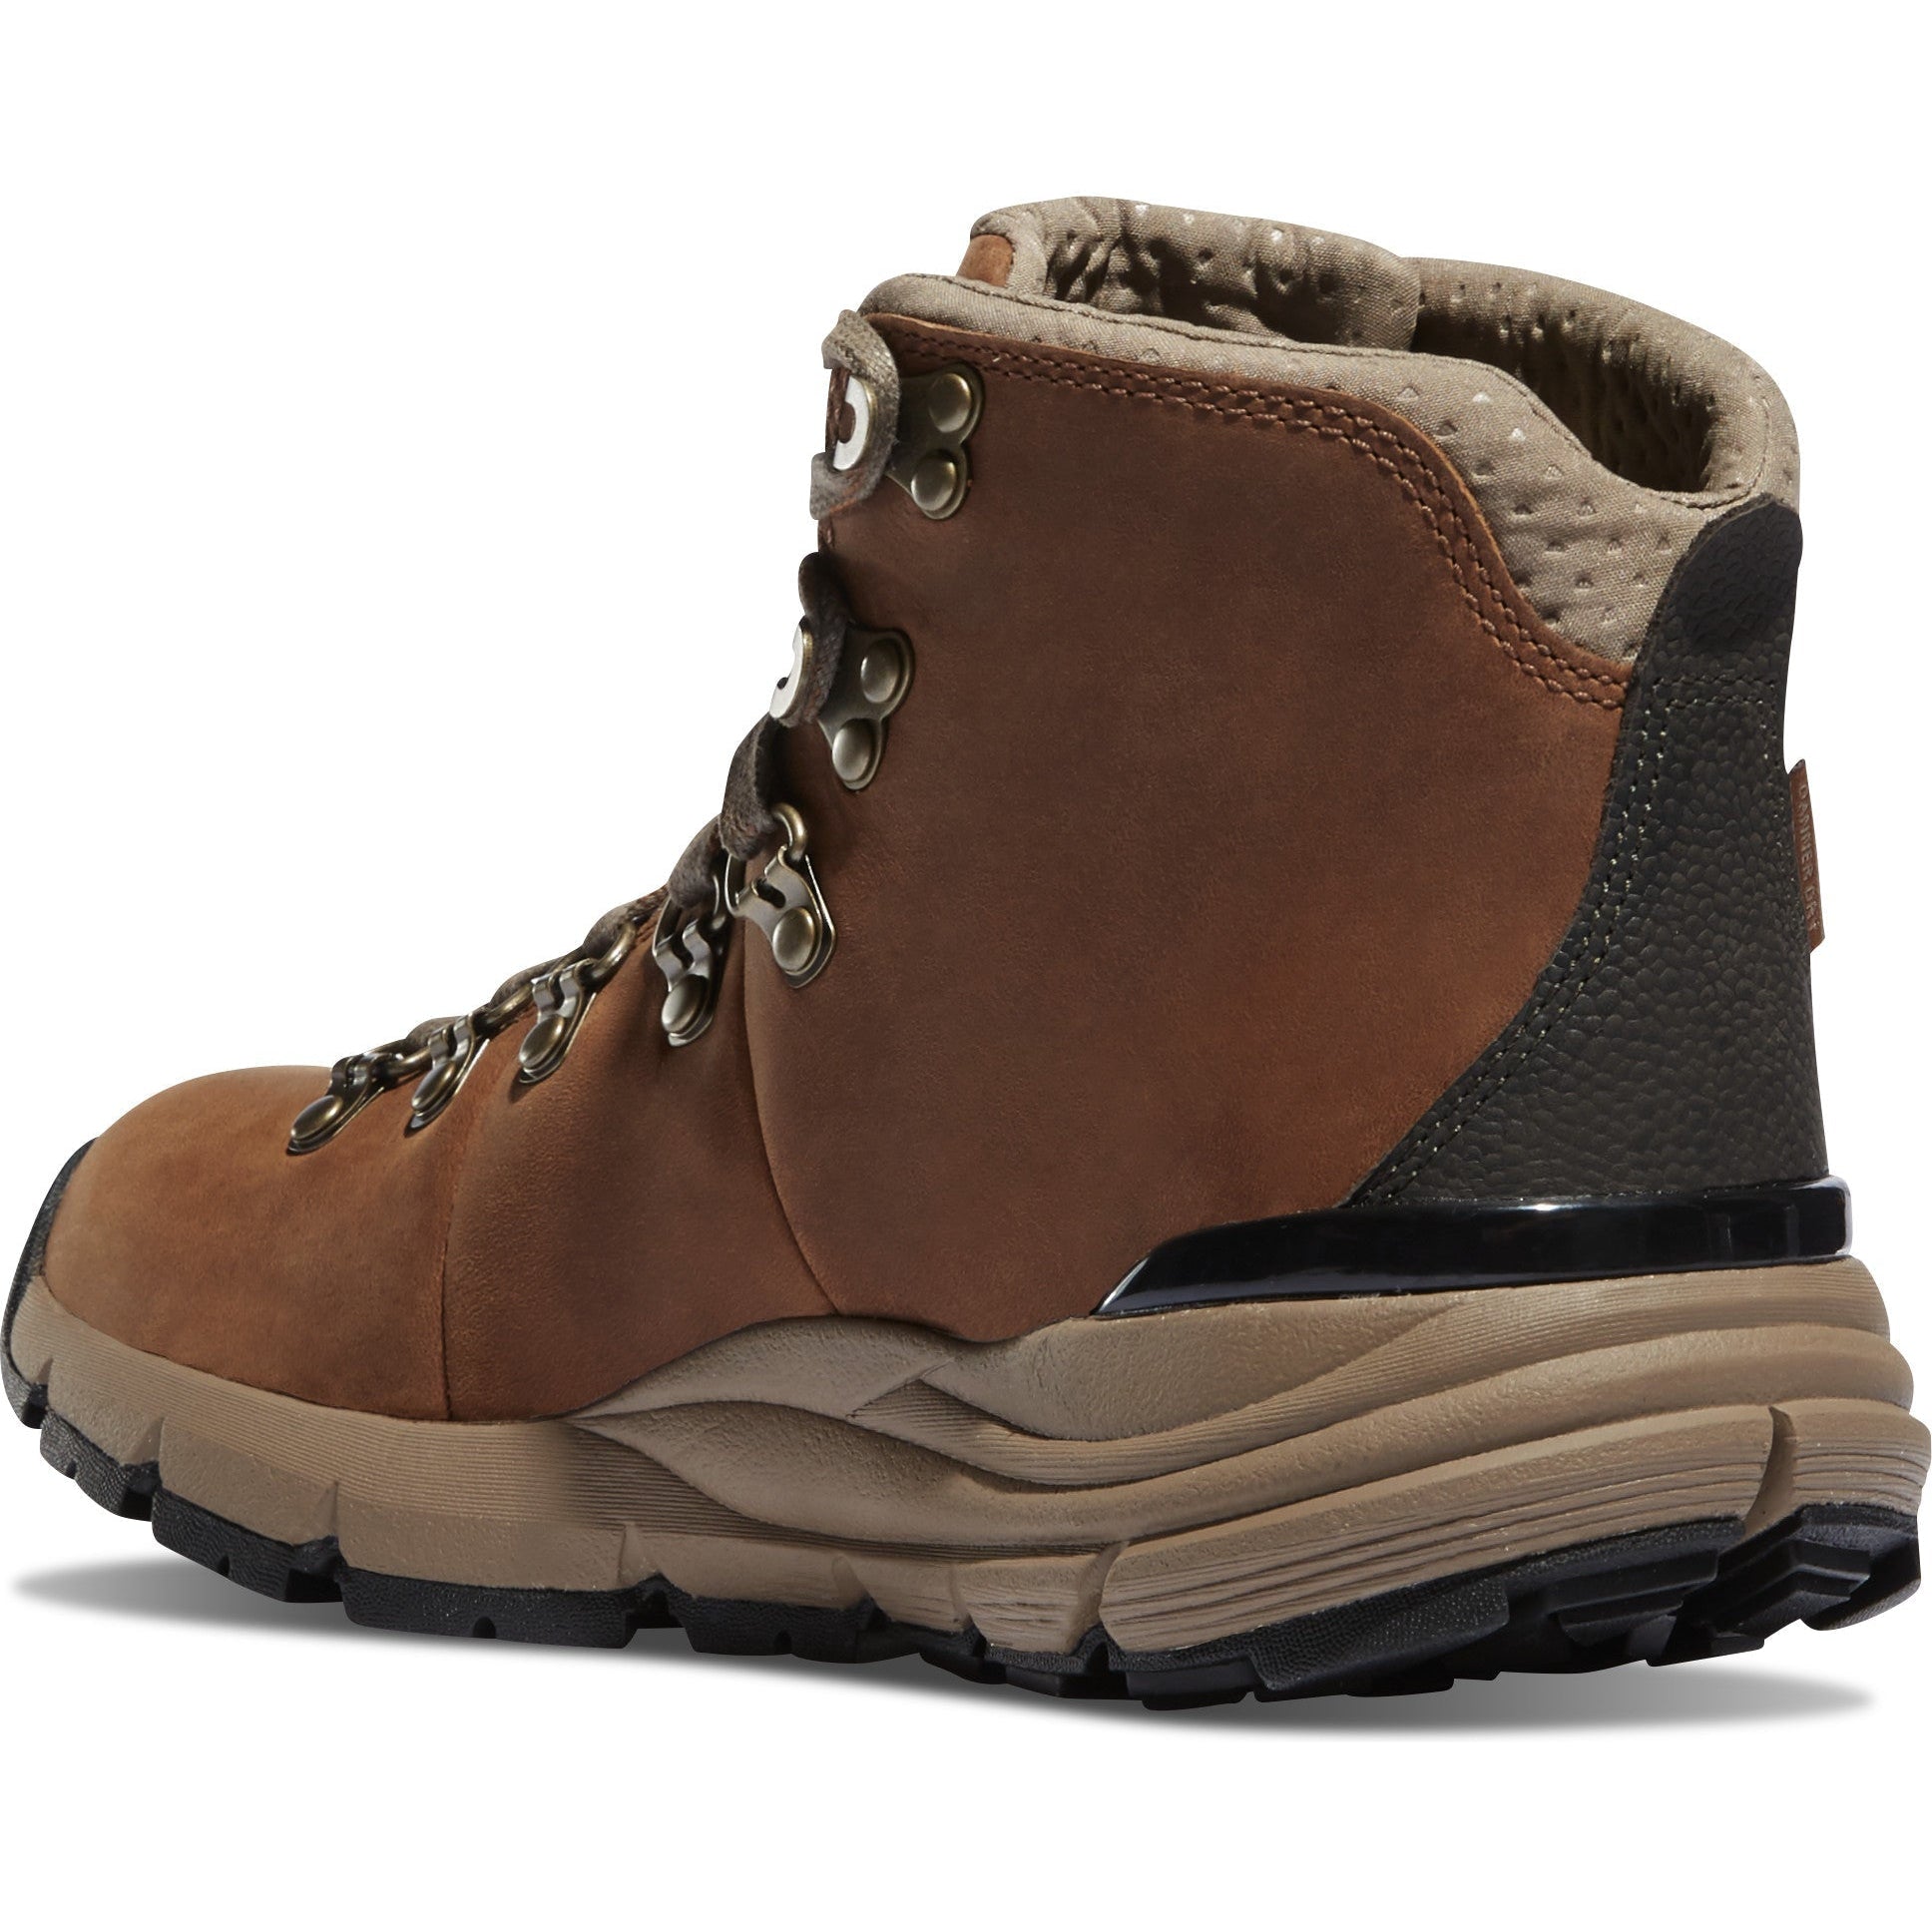 Danner Women's Mountain 600 4.5" WP Hiking Boot - Brown - 62251  - Overlook Boots